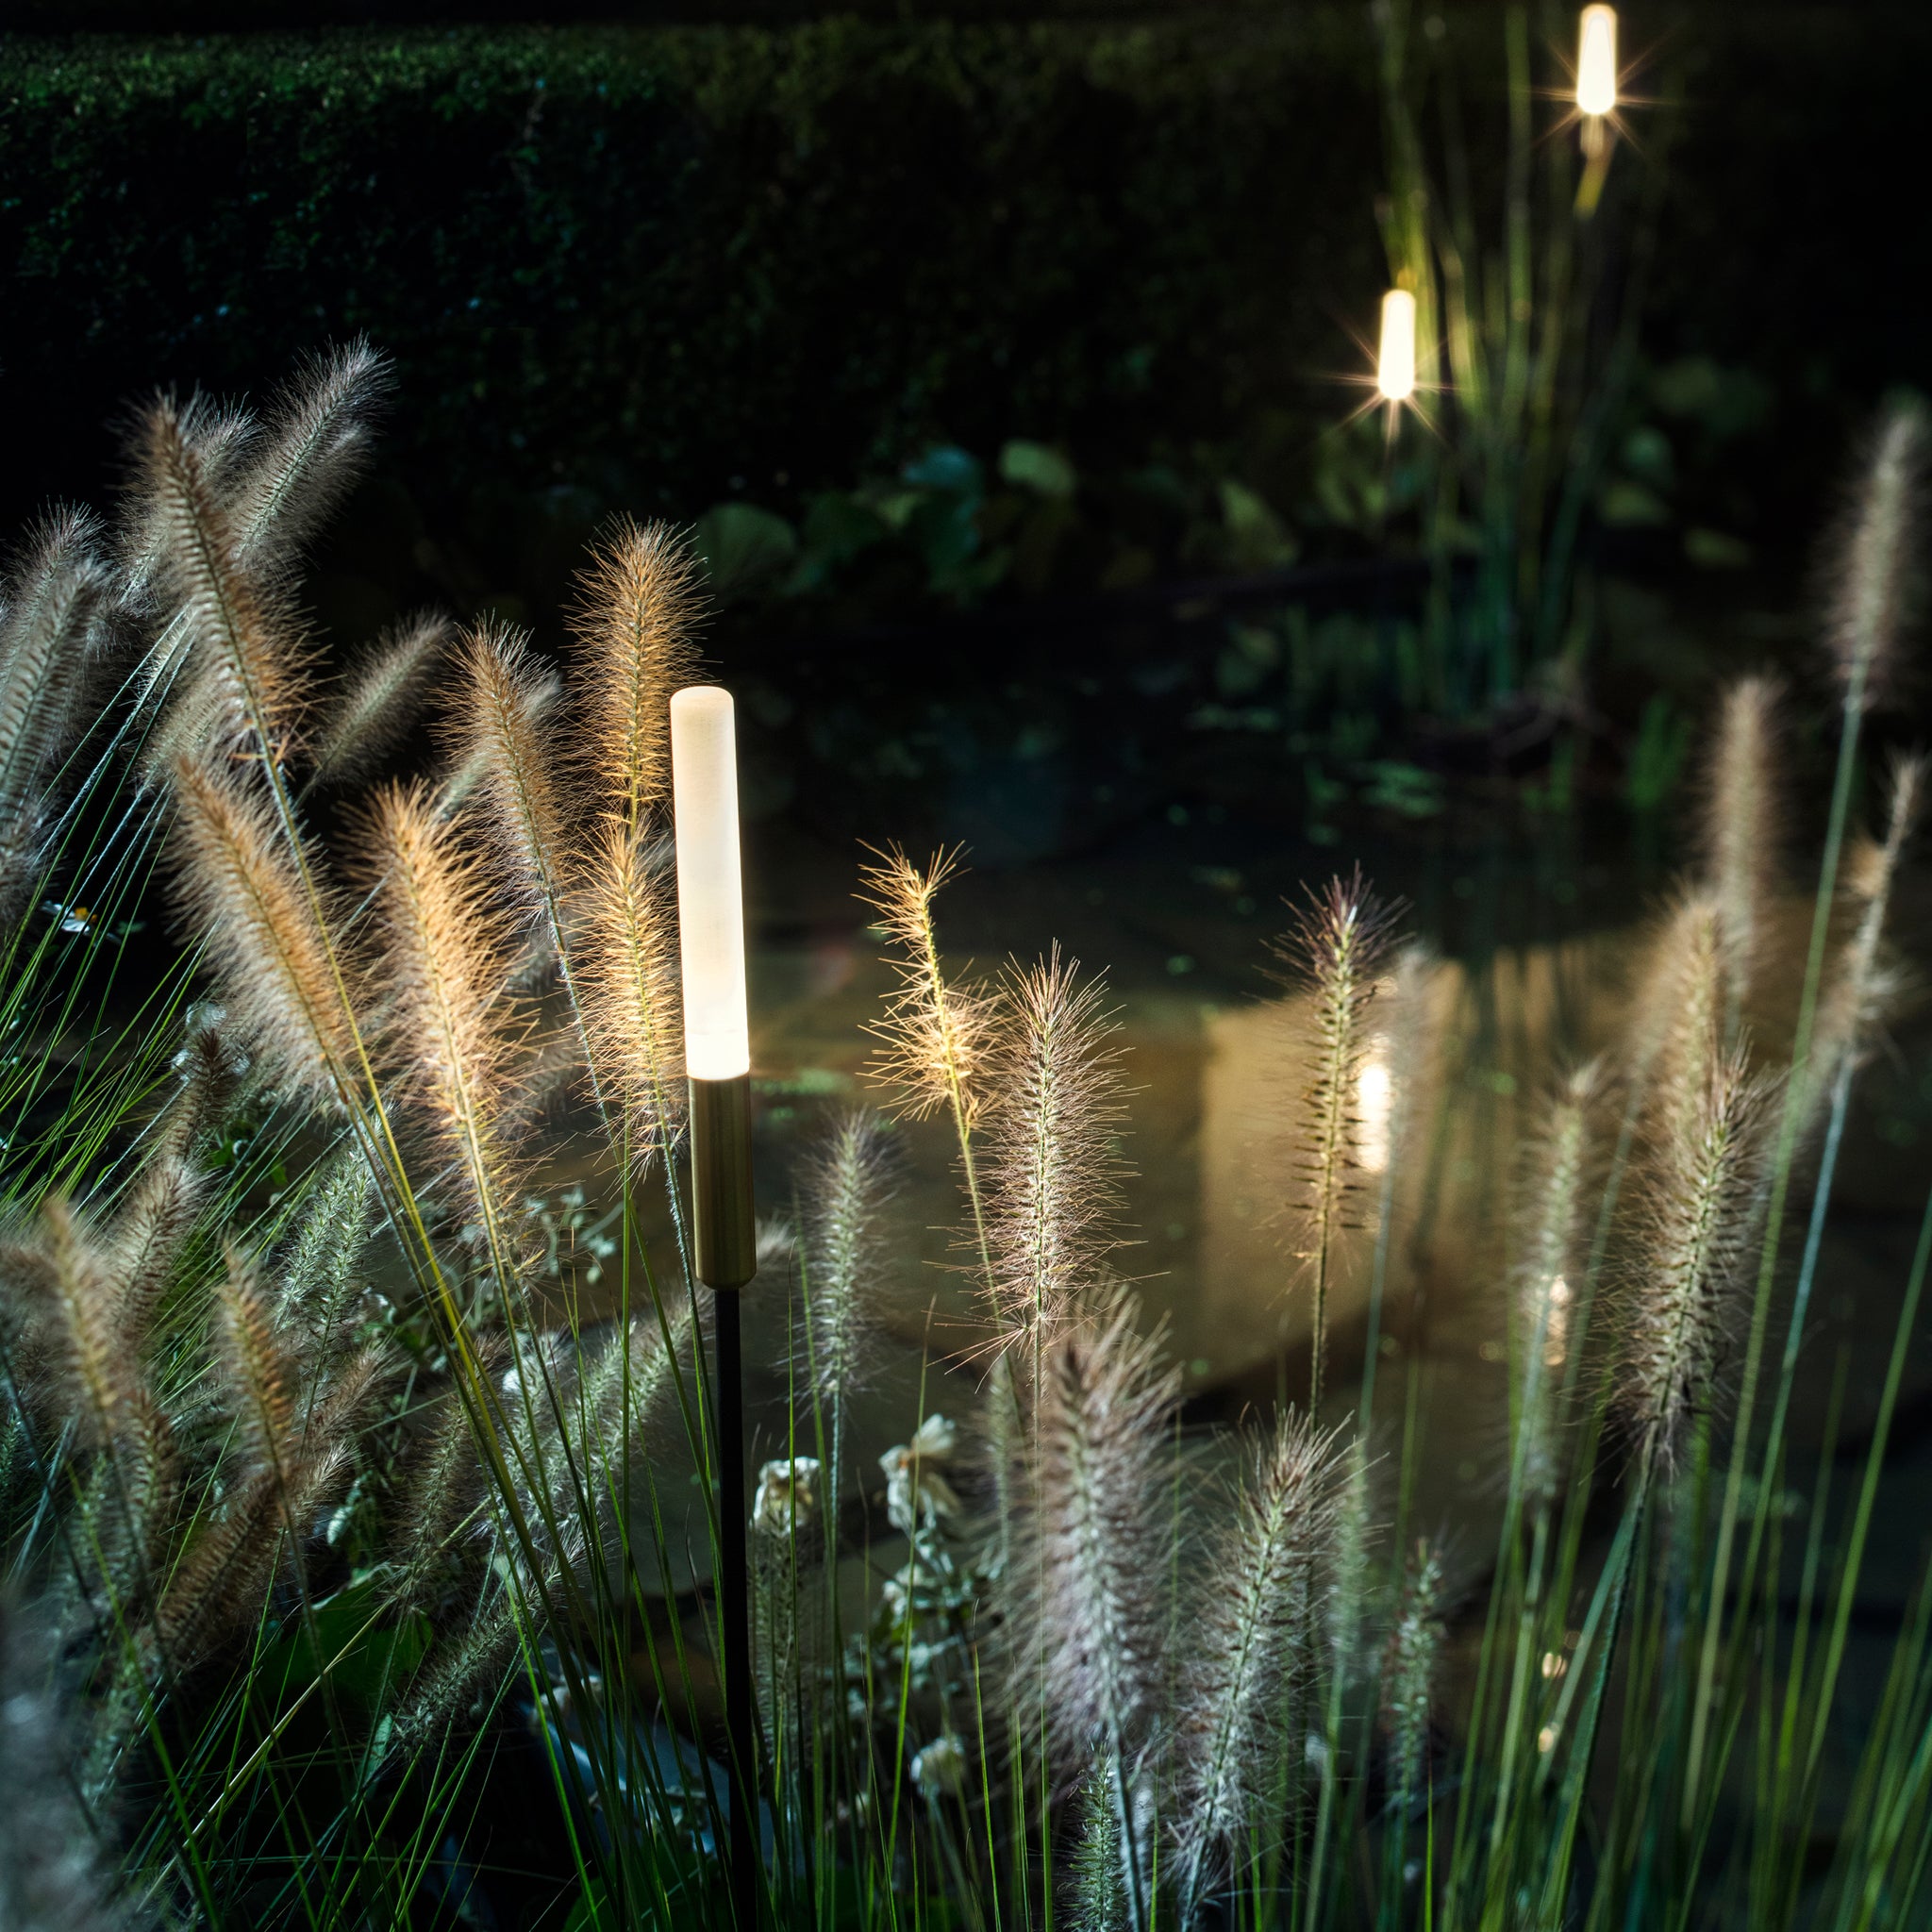 Syphasera LED Garden Light | Nicholas Engert Interiors